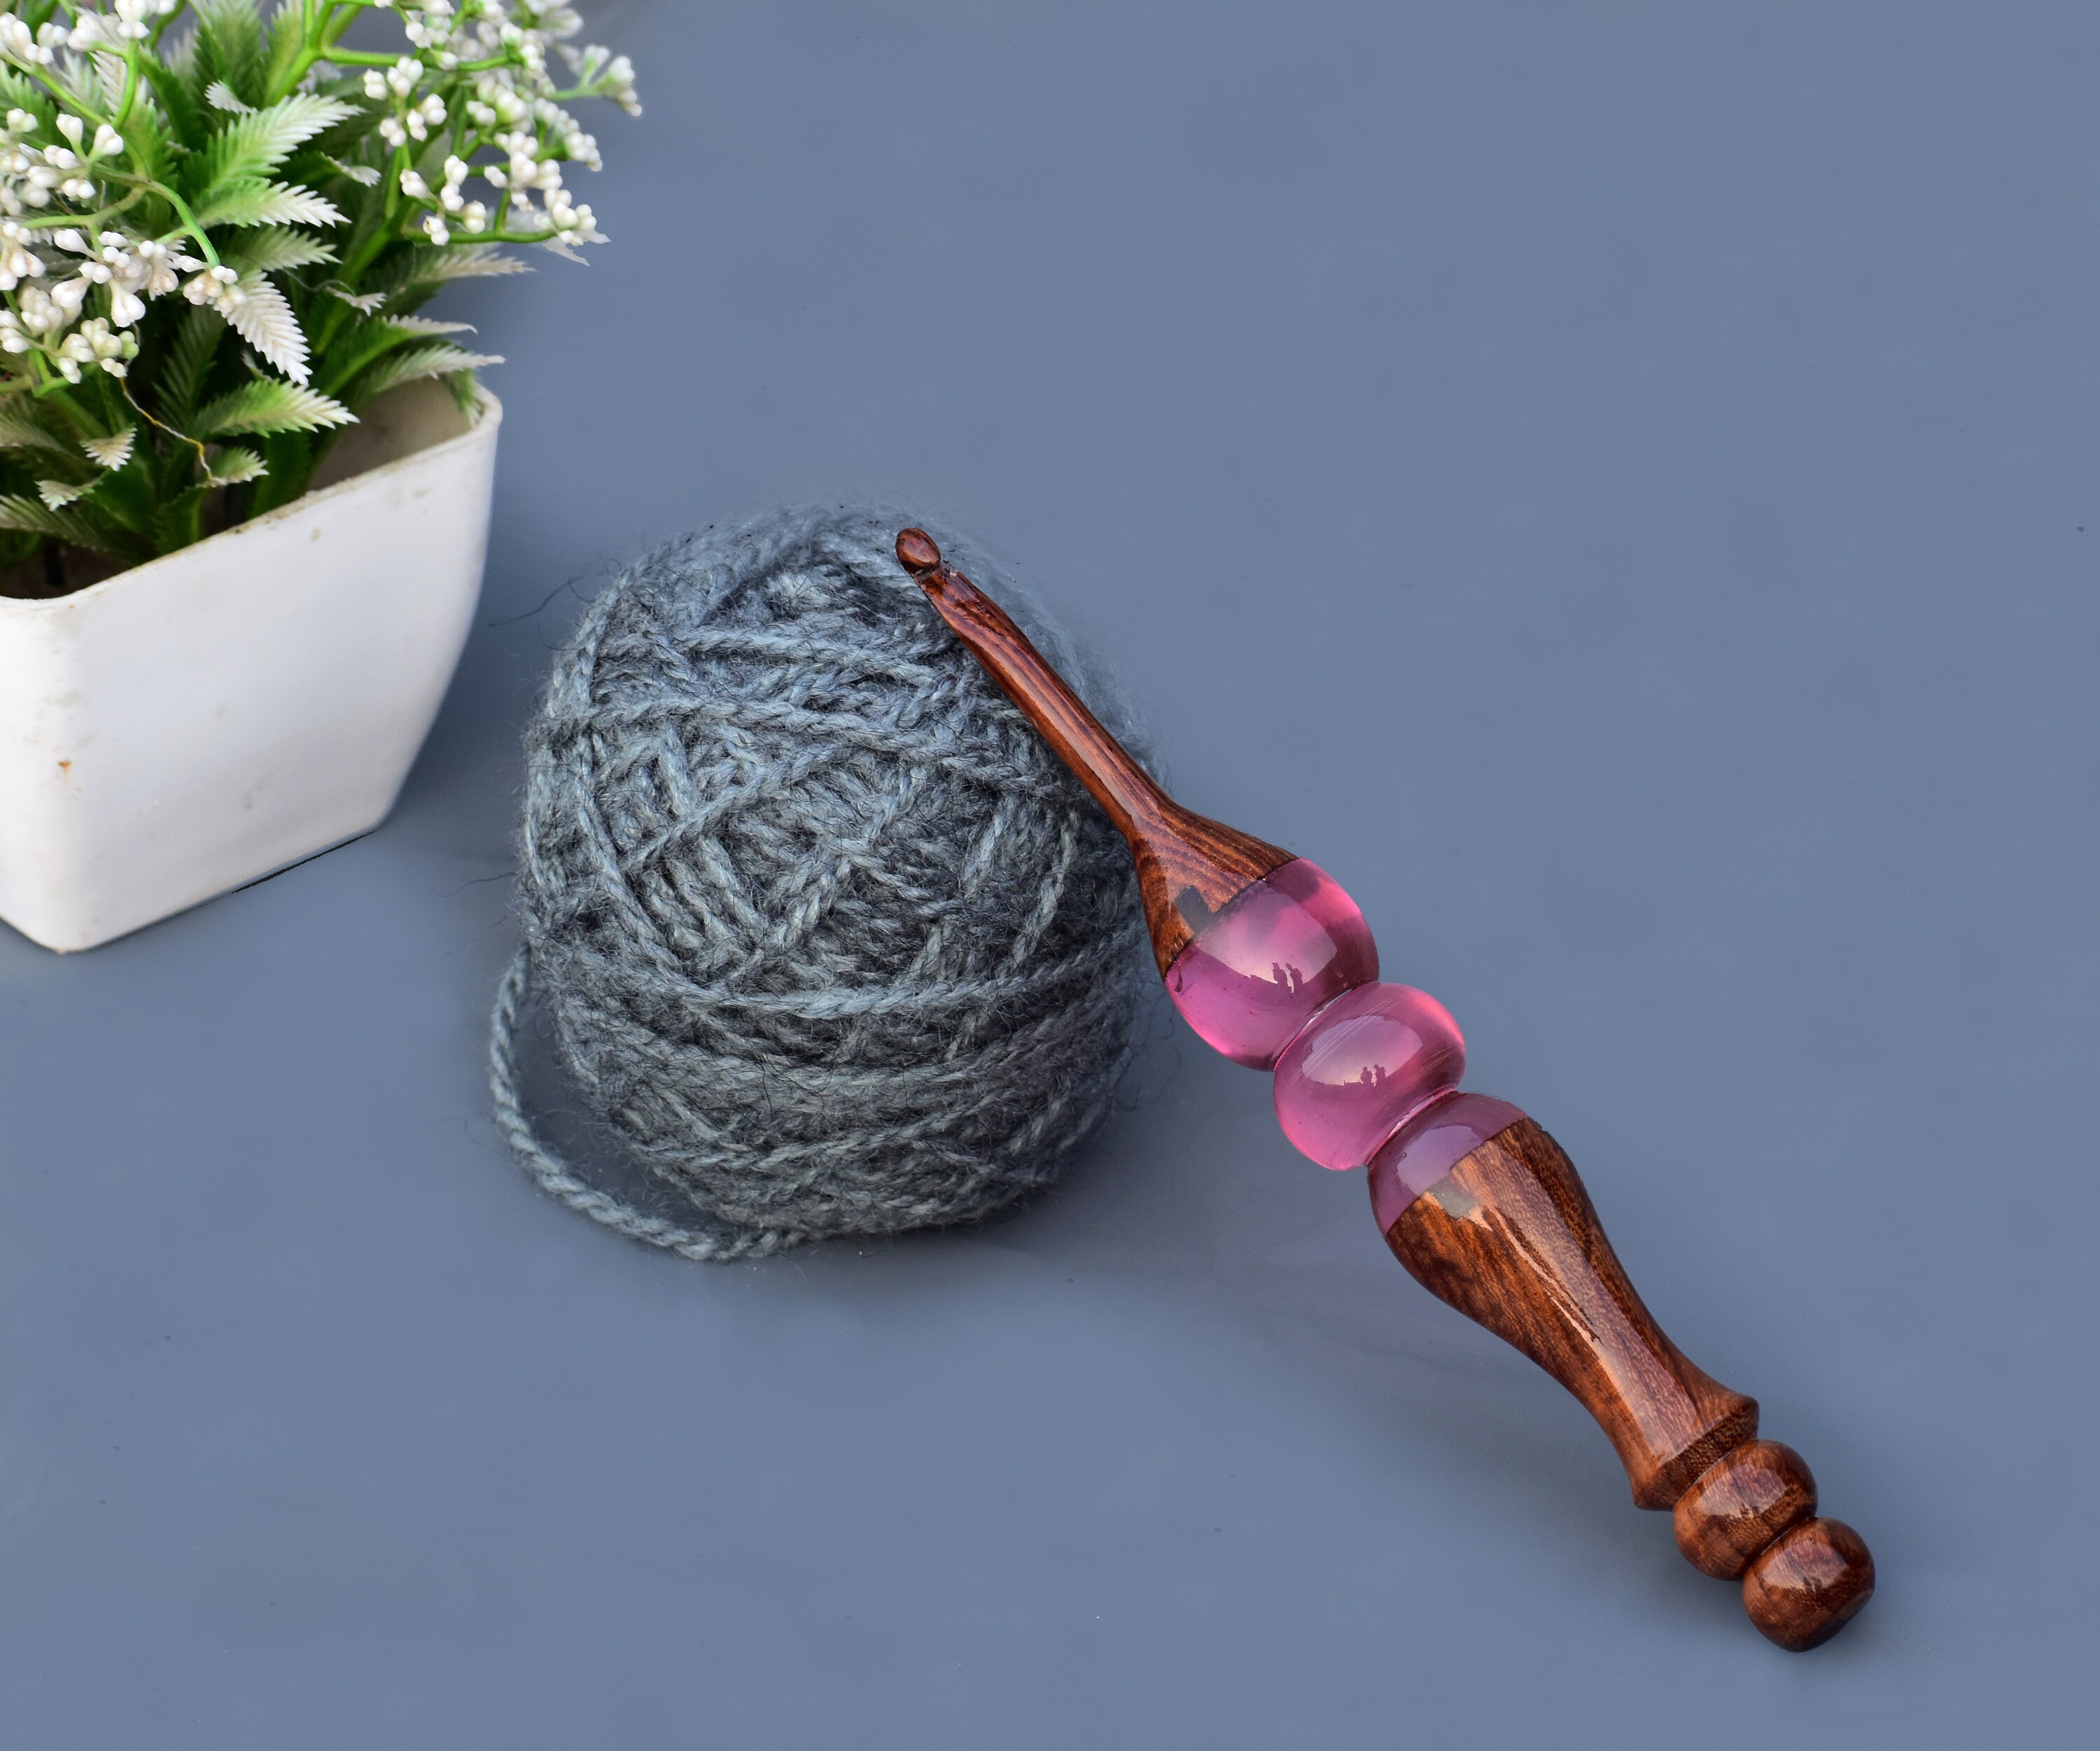 INTAJ Handmade Wooden Crochet Hook - Rosewood Needle Crochet Hooks Set -  Yarn Craft Knitting Needle for Chrocheting Lace Doilies Flower Projects  (Set